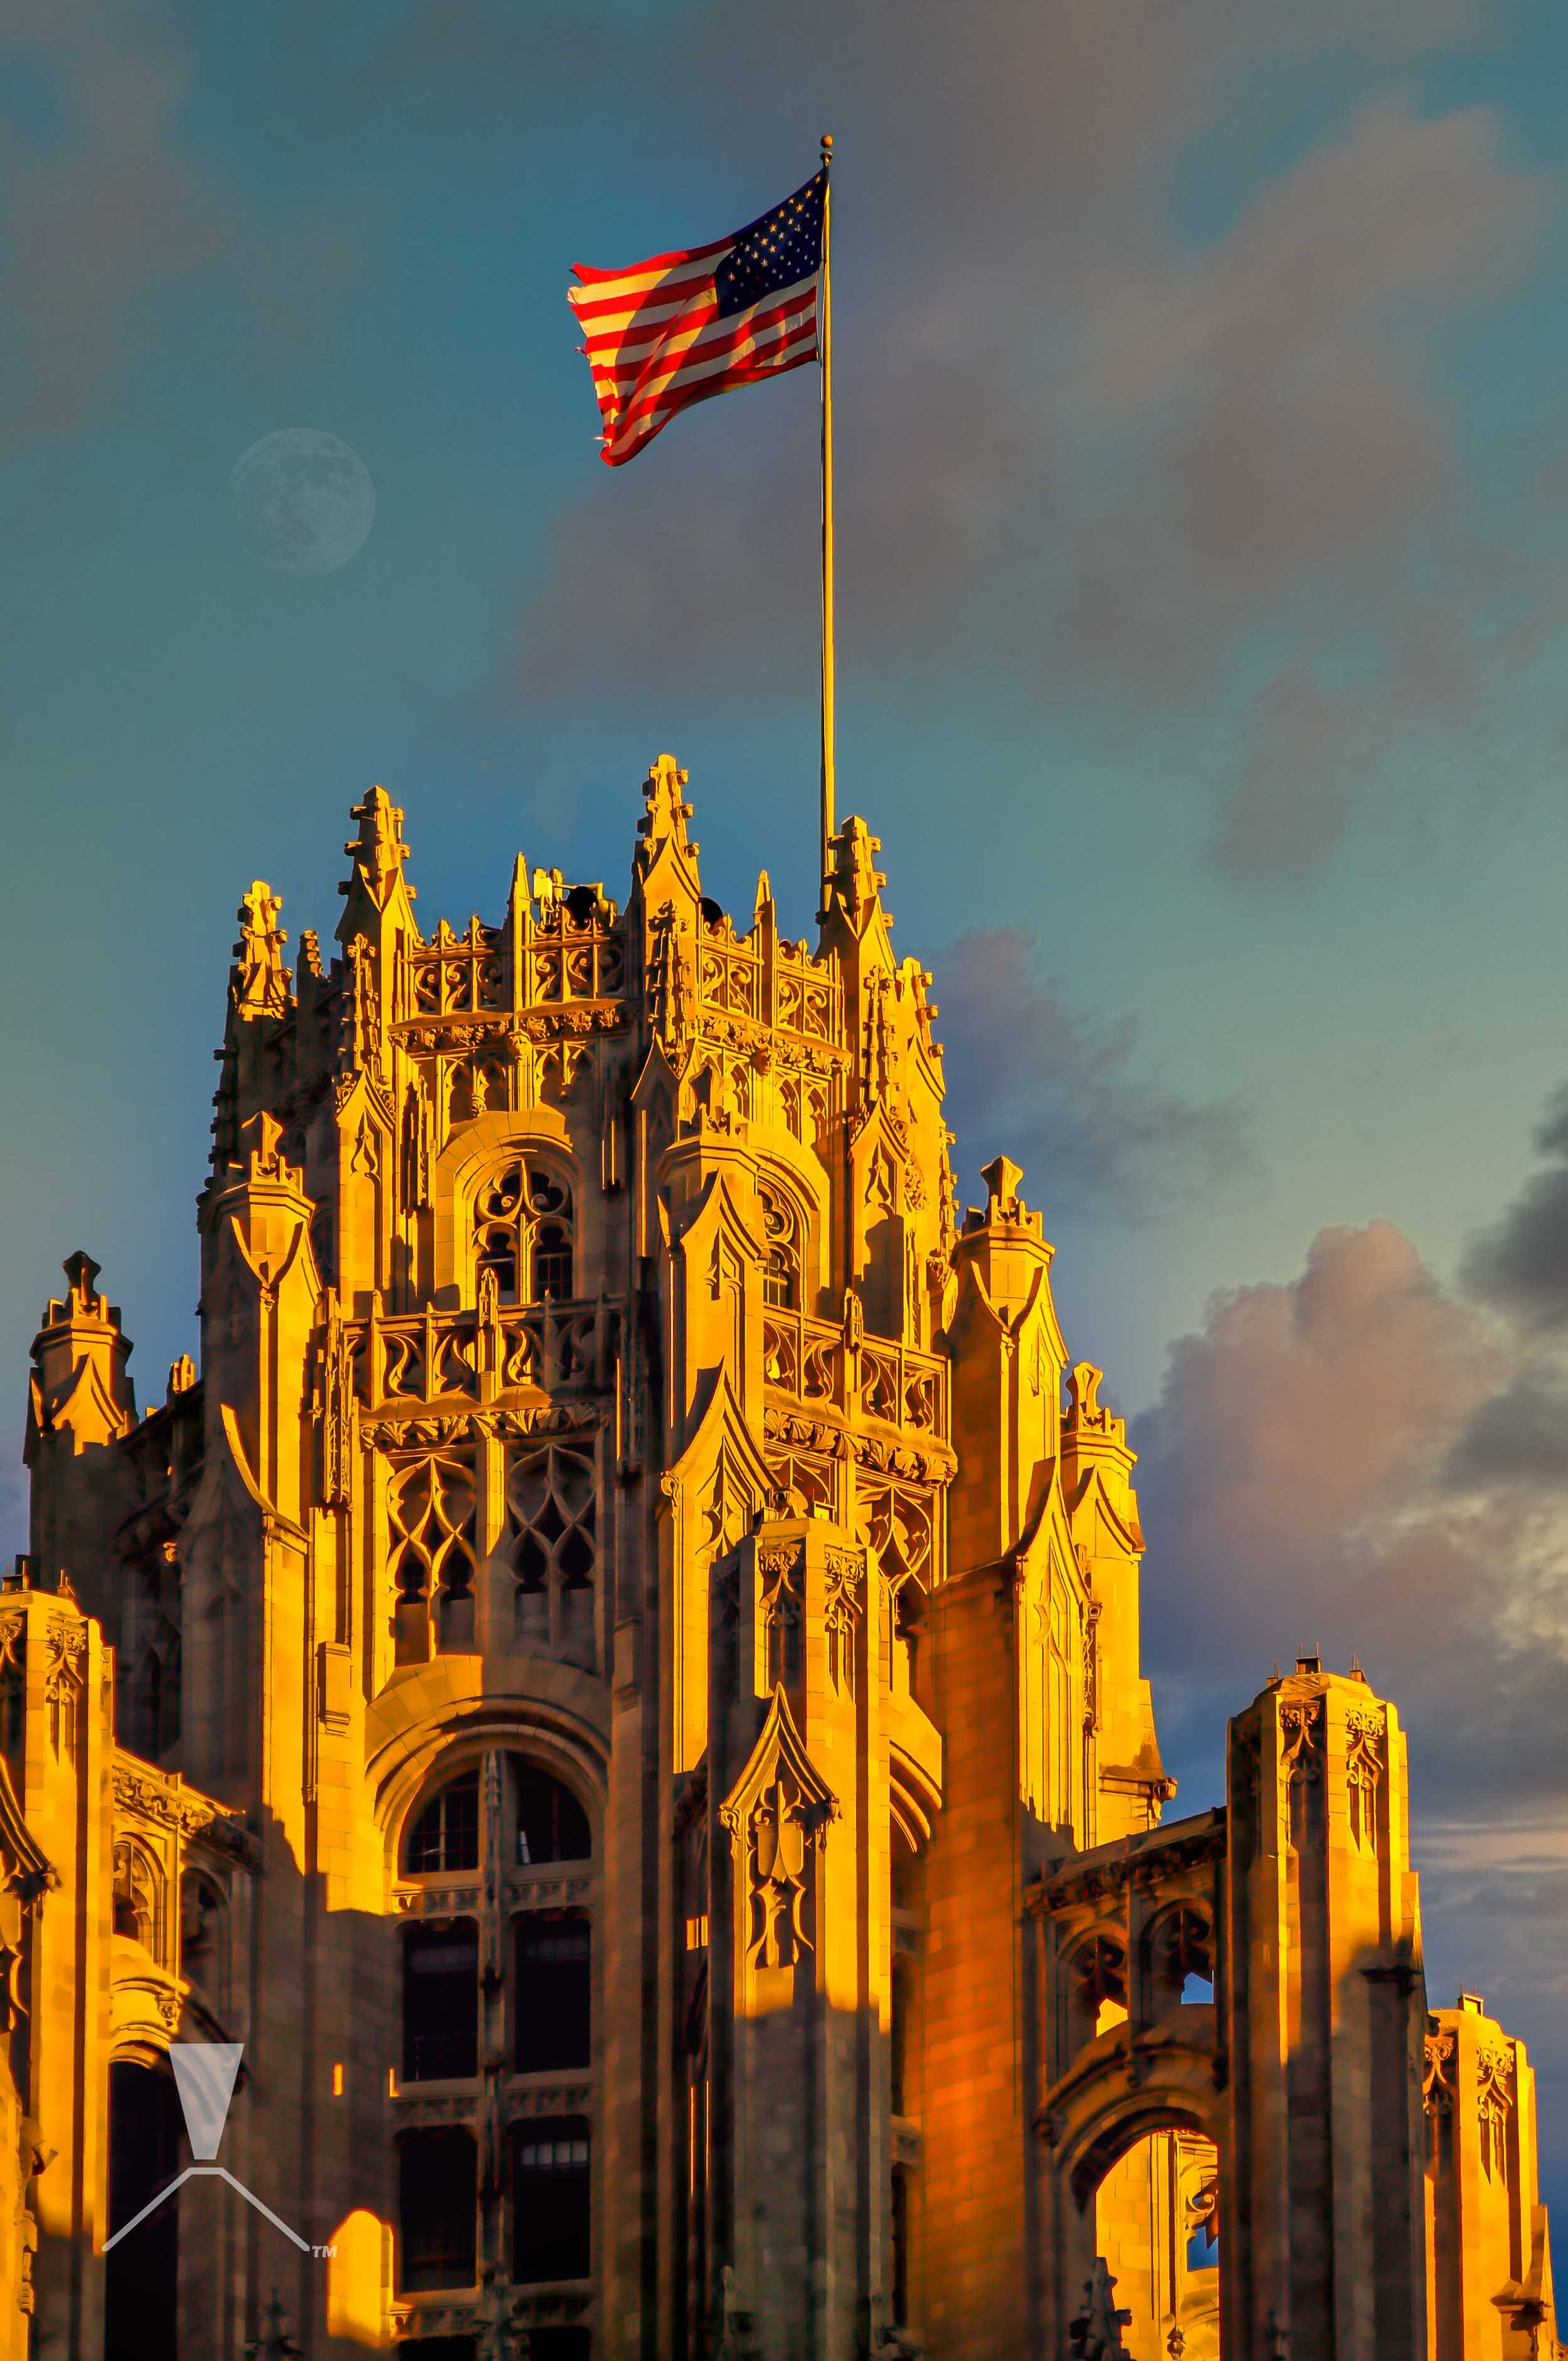 tribune-tower-chicago-illinois-sunset-moon-flag.jpg